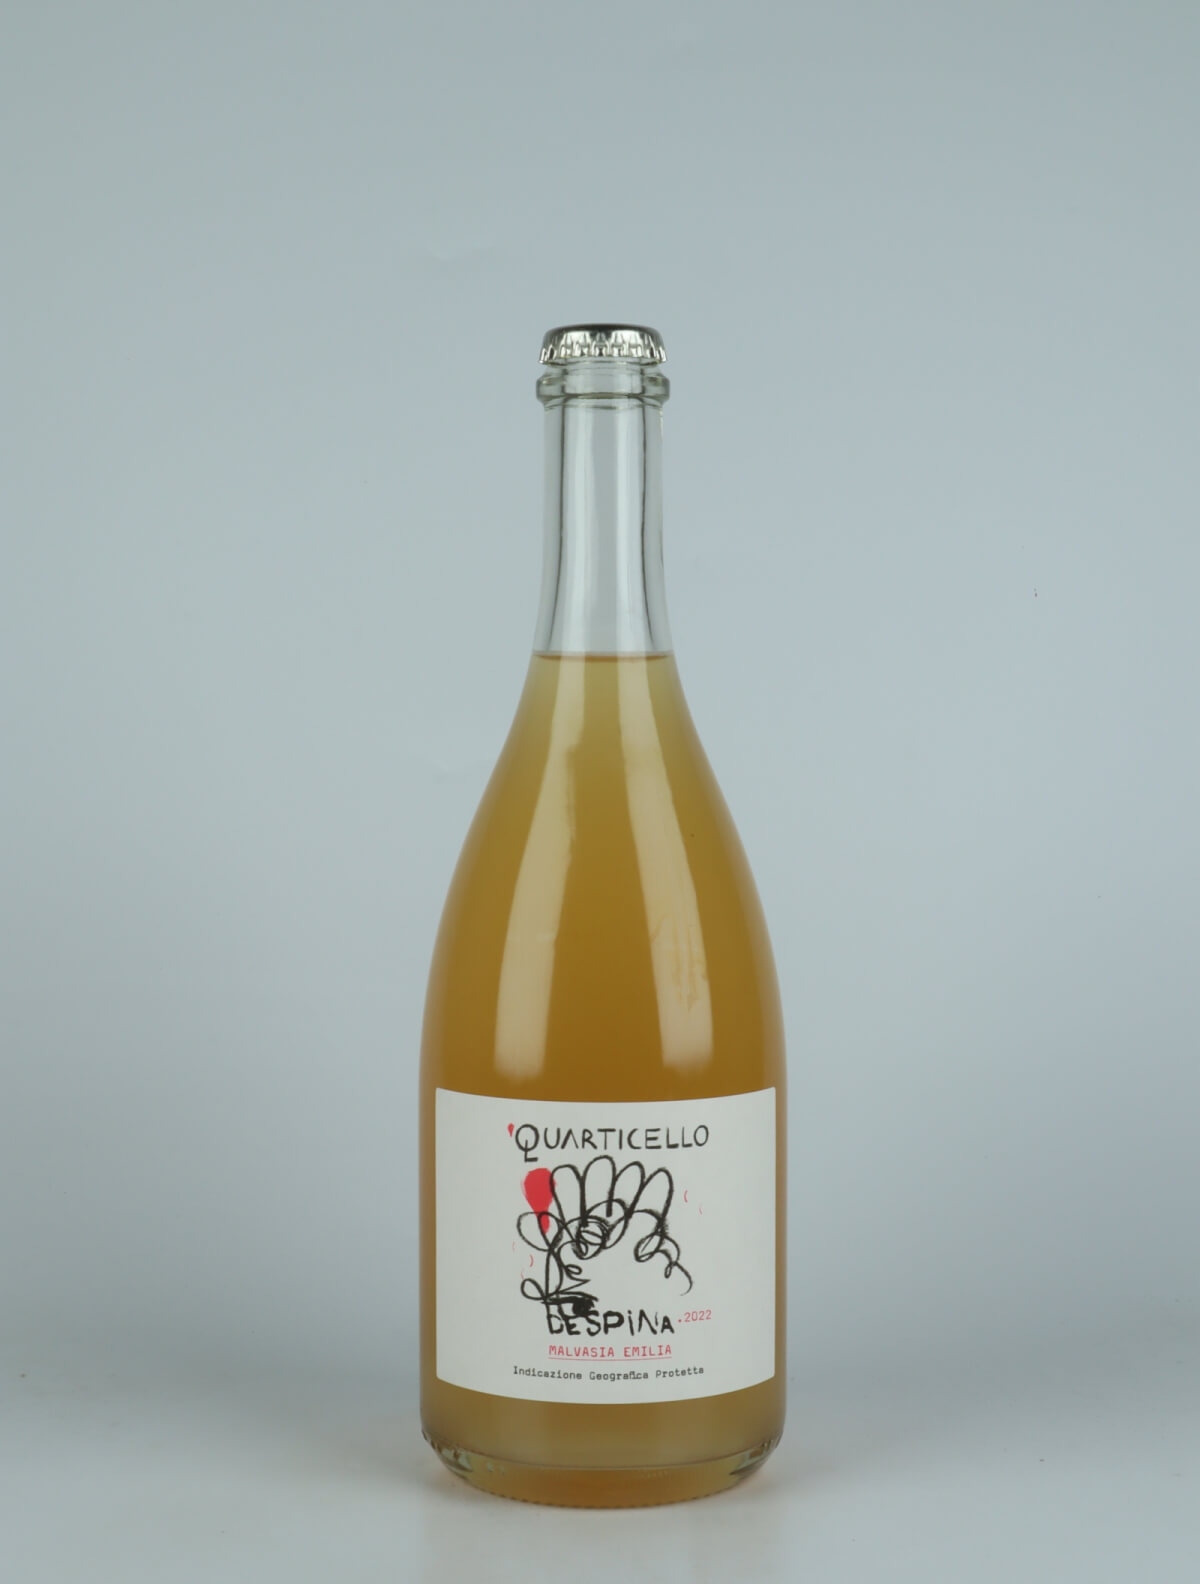 A bottle 2022 Despina Sparkling from Quarticello, Emilia-Romagna in Italy